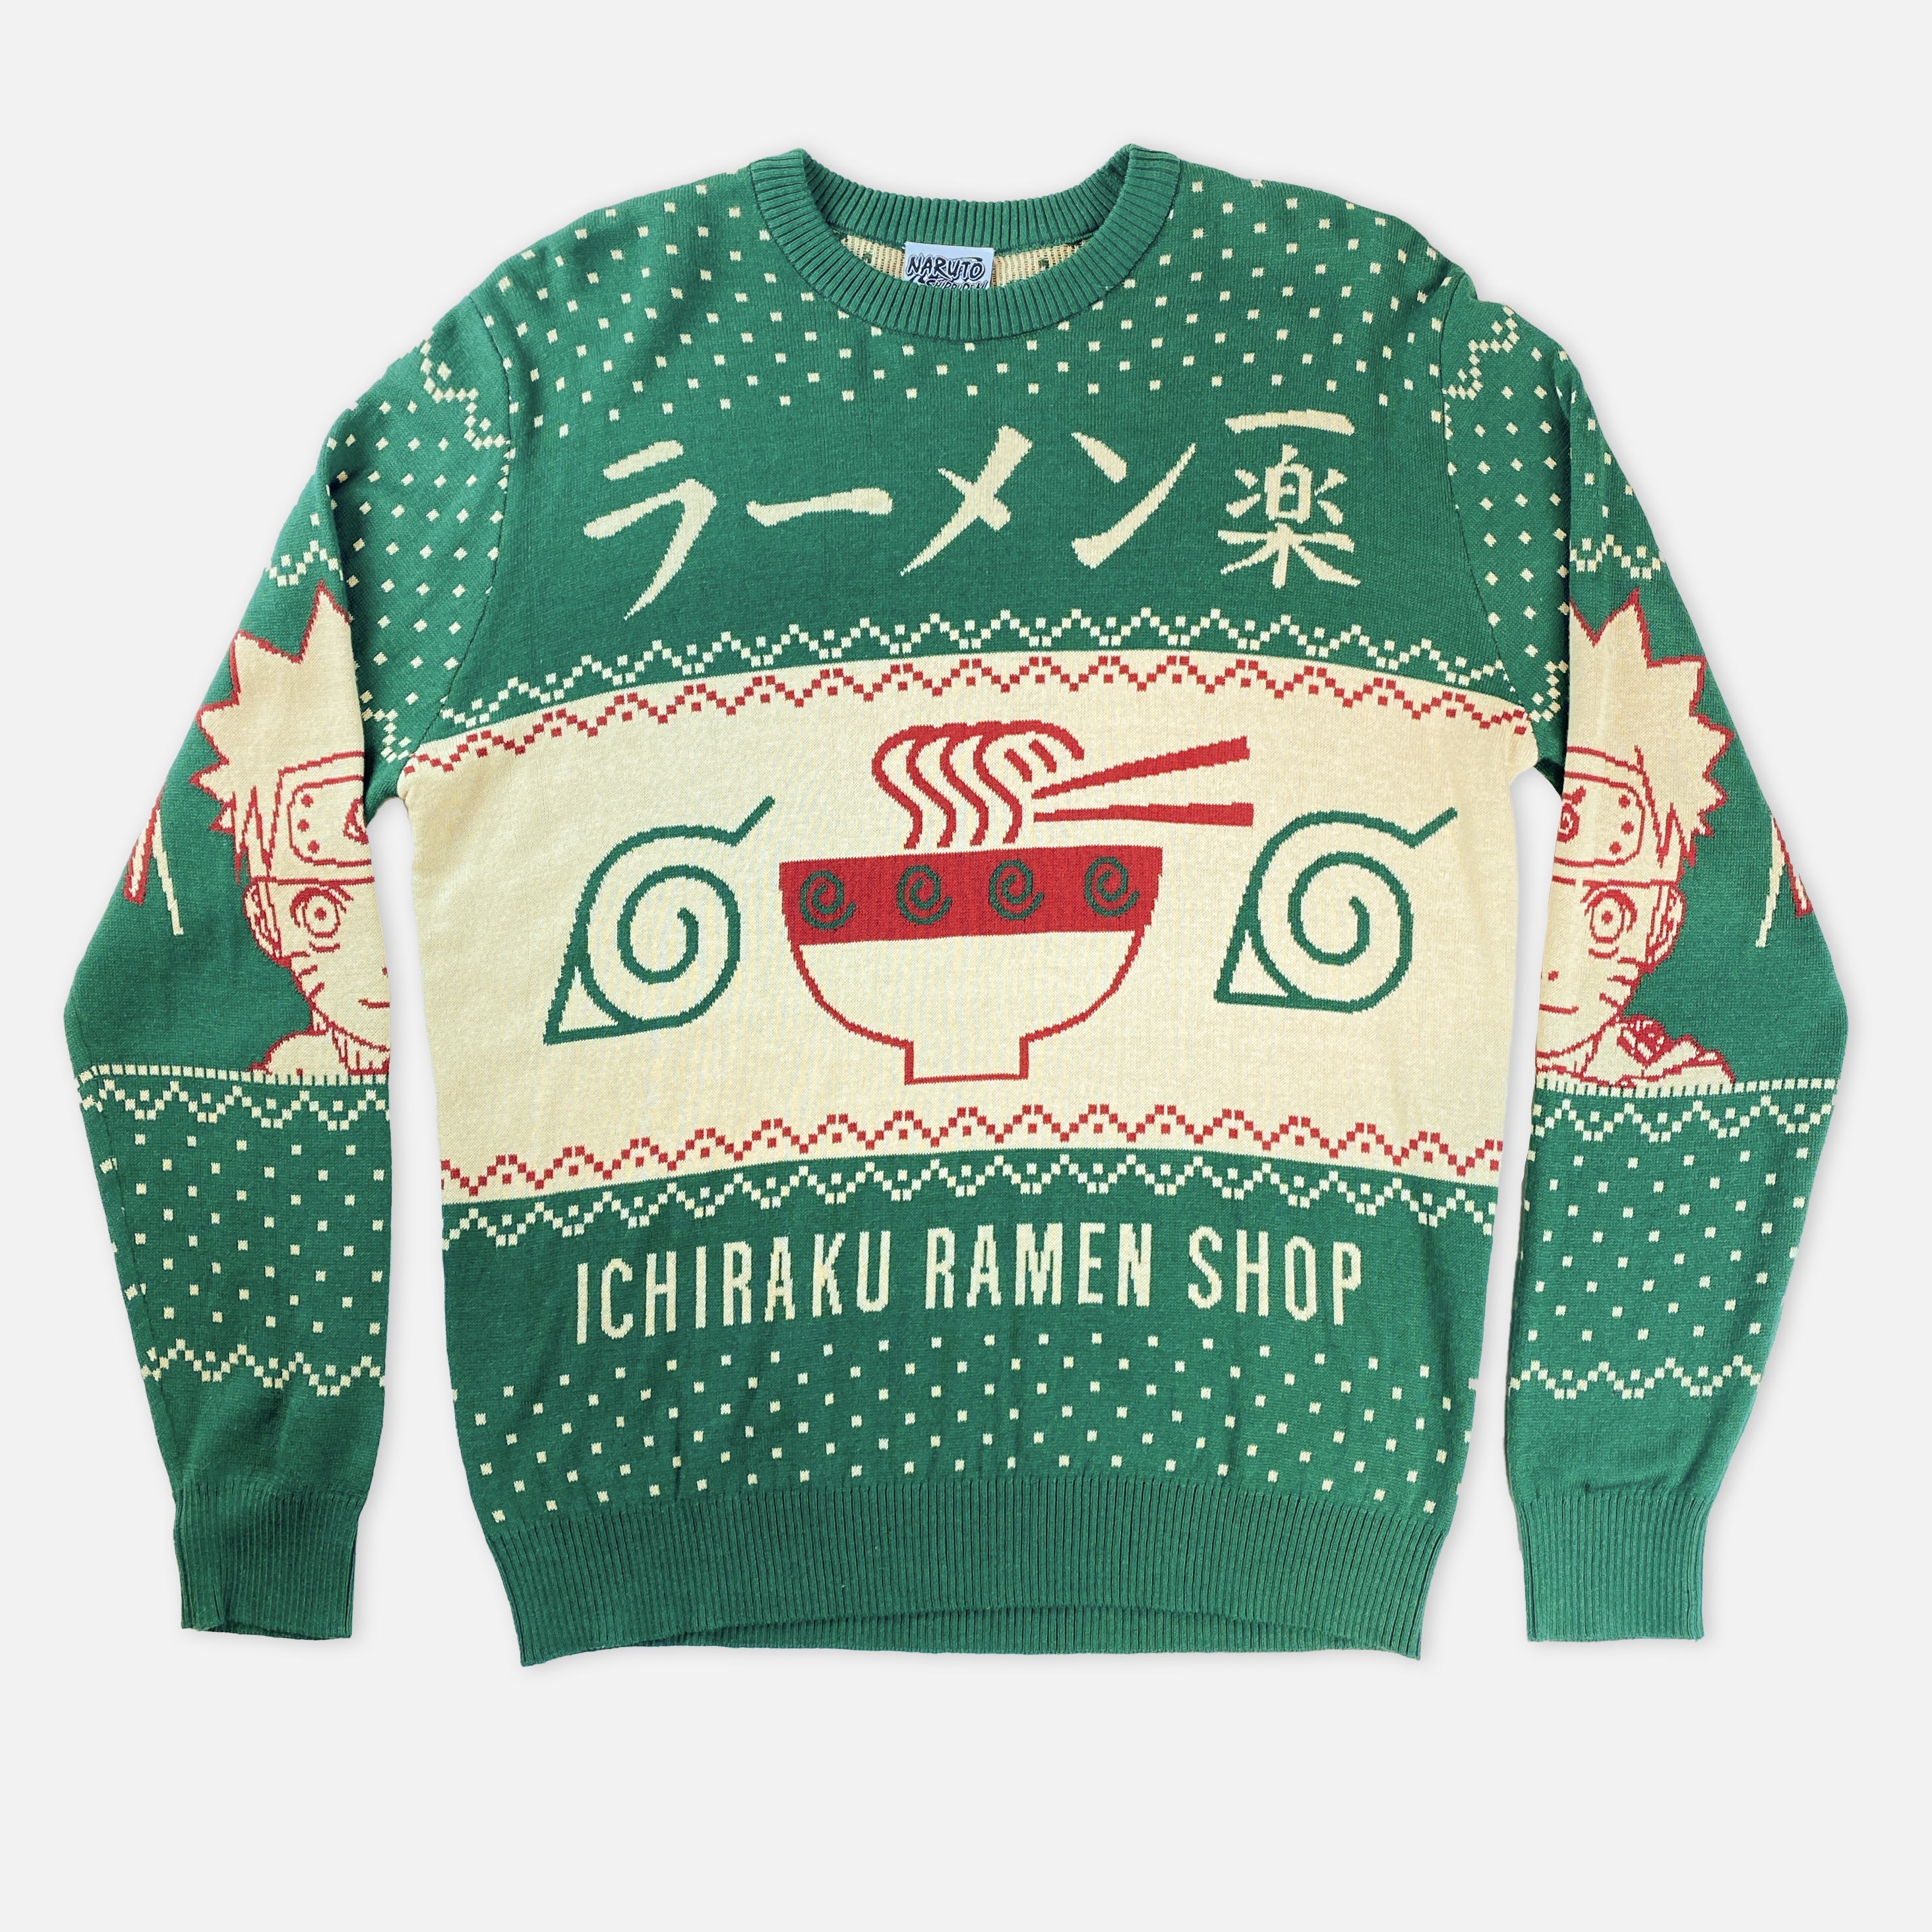 Naruto Shippuden - Ichiraku Ramen Shop Holiday Sweater - Crunchyroll Exclusive! image count 0